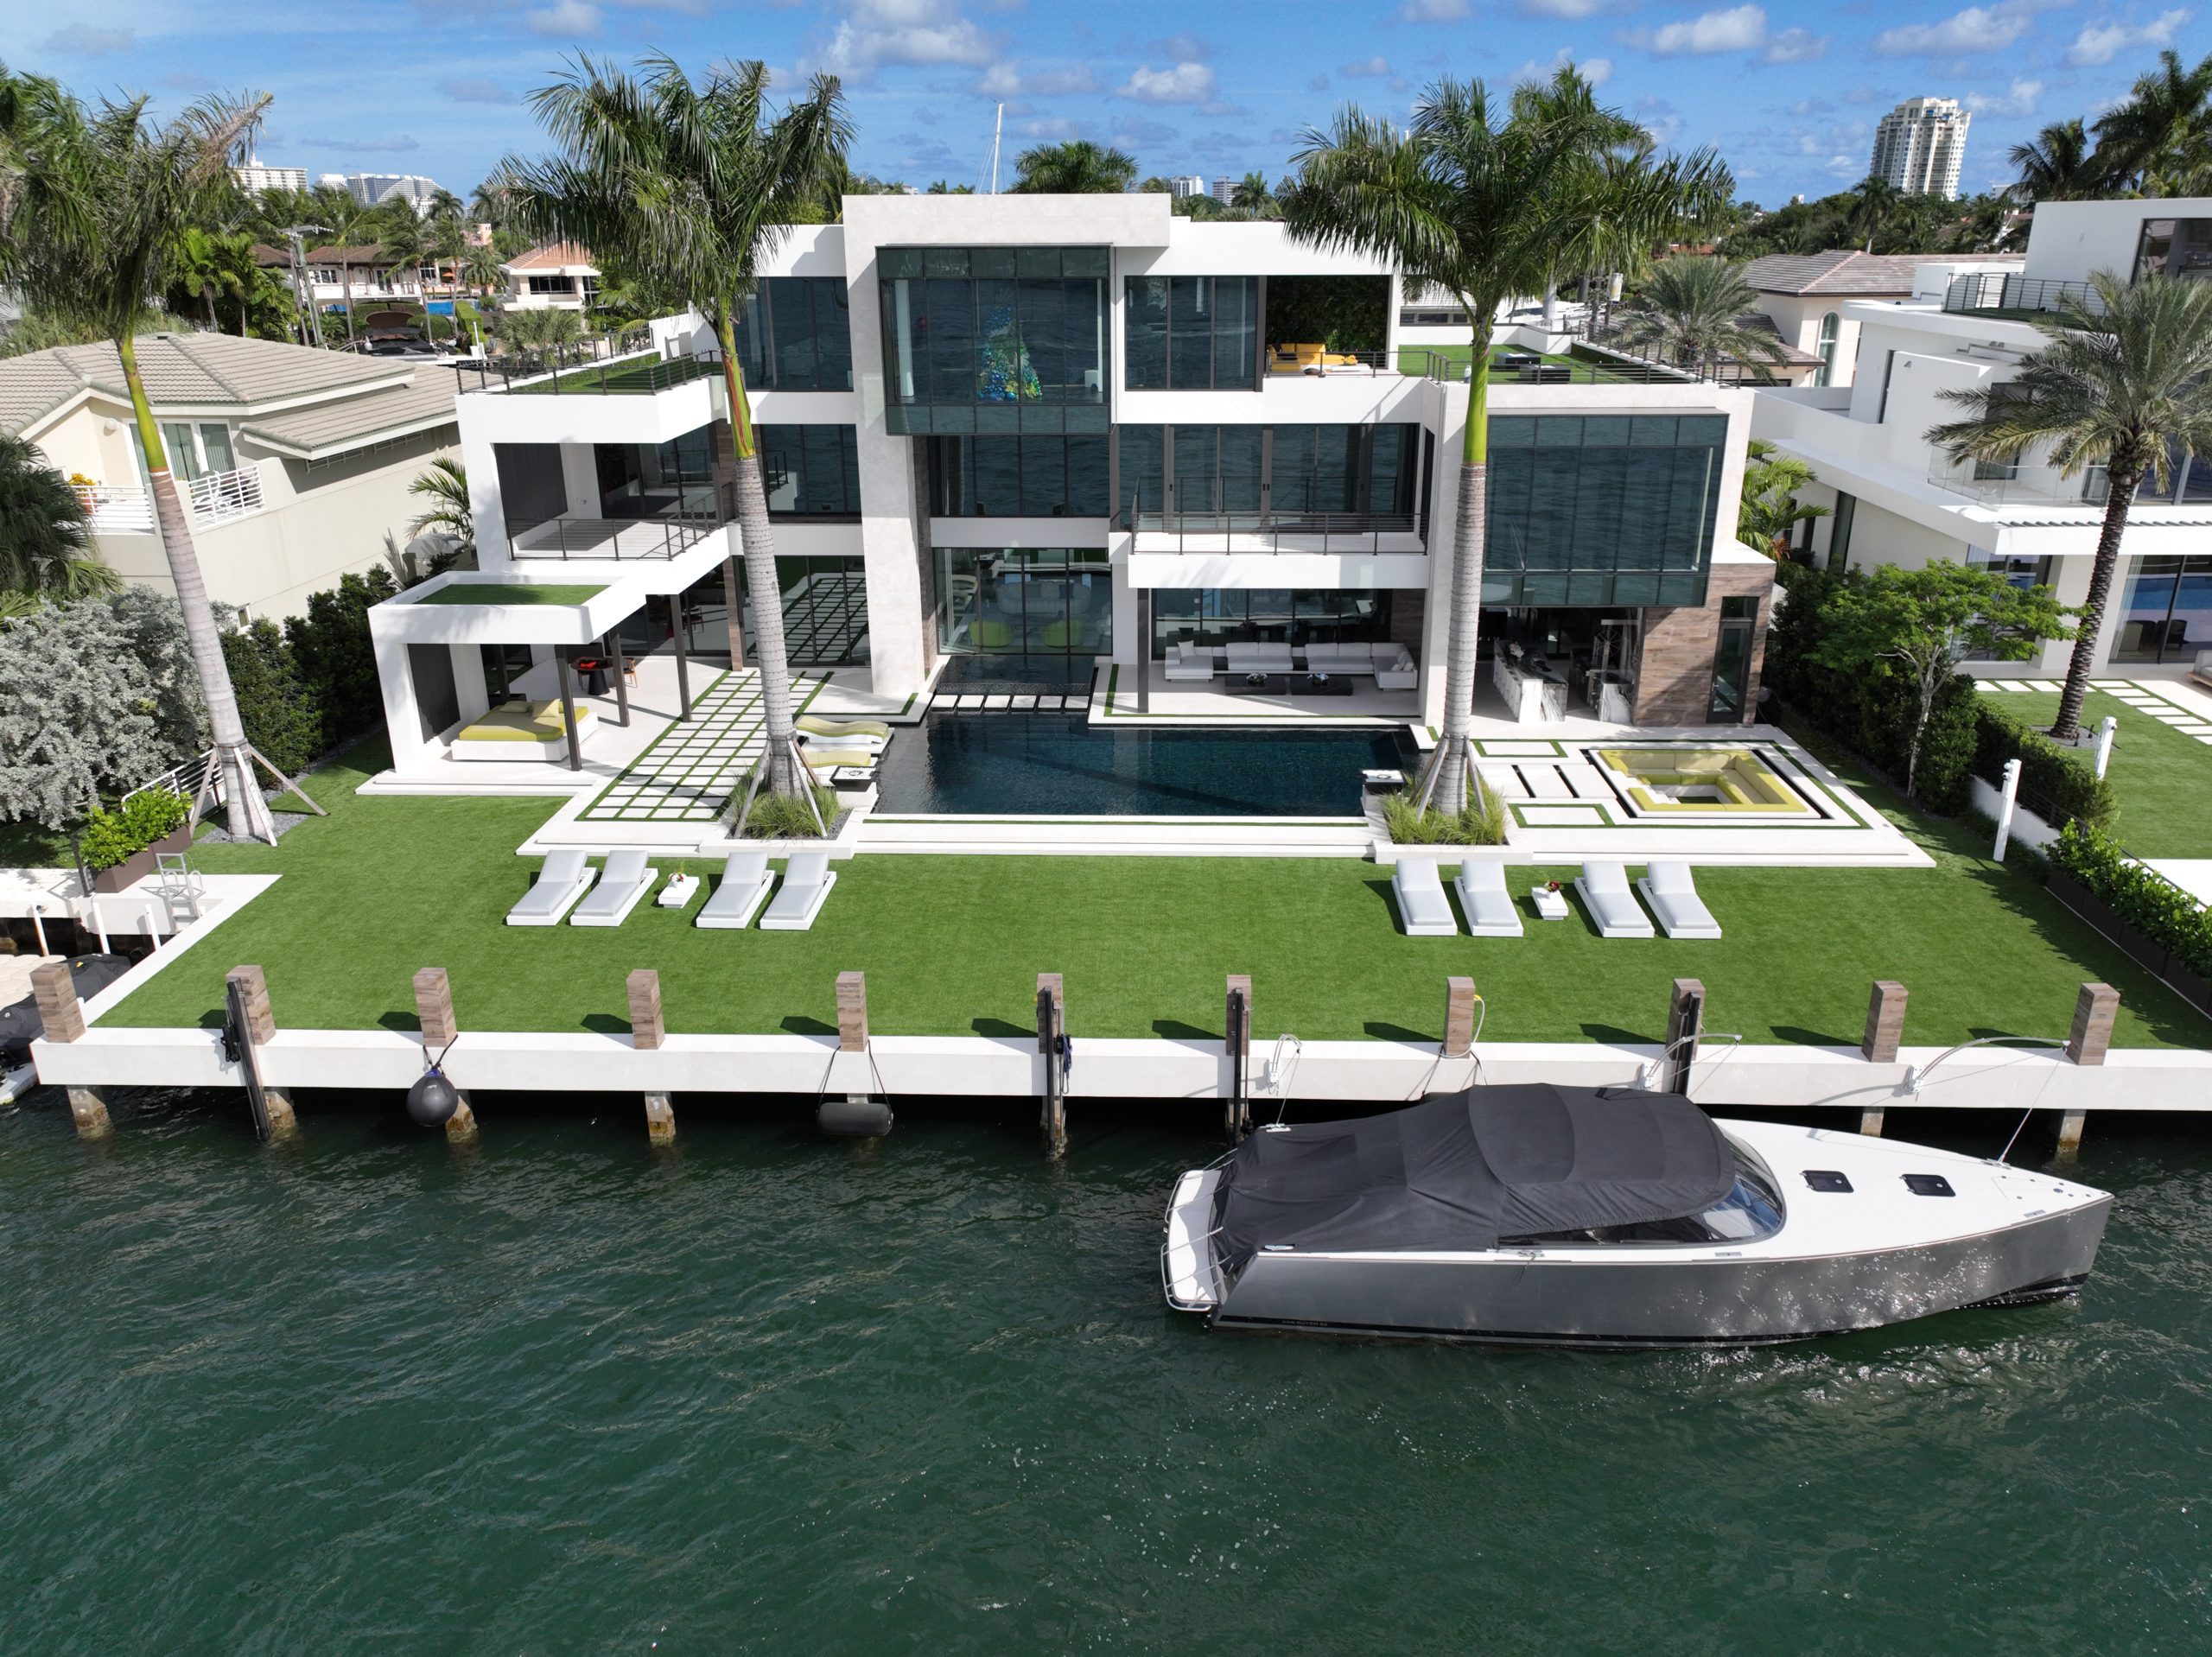 Discover Luxury Homes in Harbor Beach, Fort Lauderdale: Exclusive Properties in an Esteemed Neighborhood